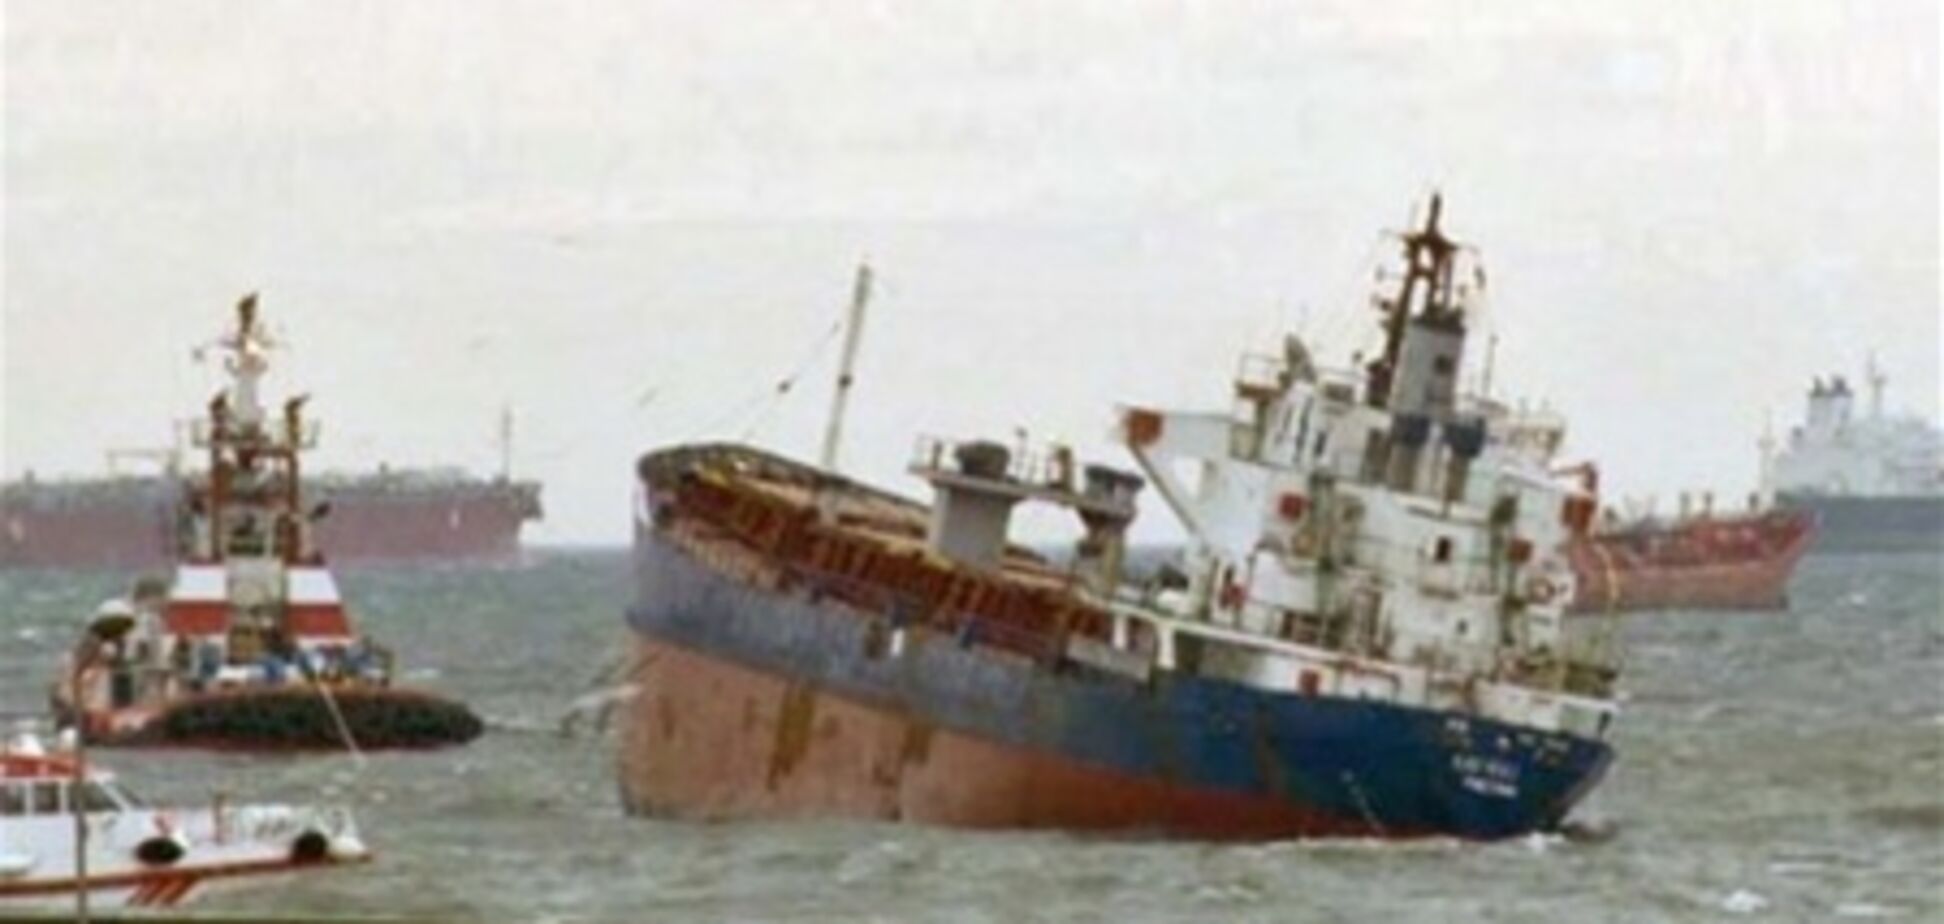 В Босфорском проливе столкнулись три судна